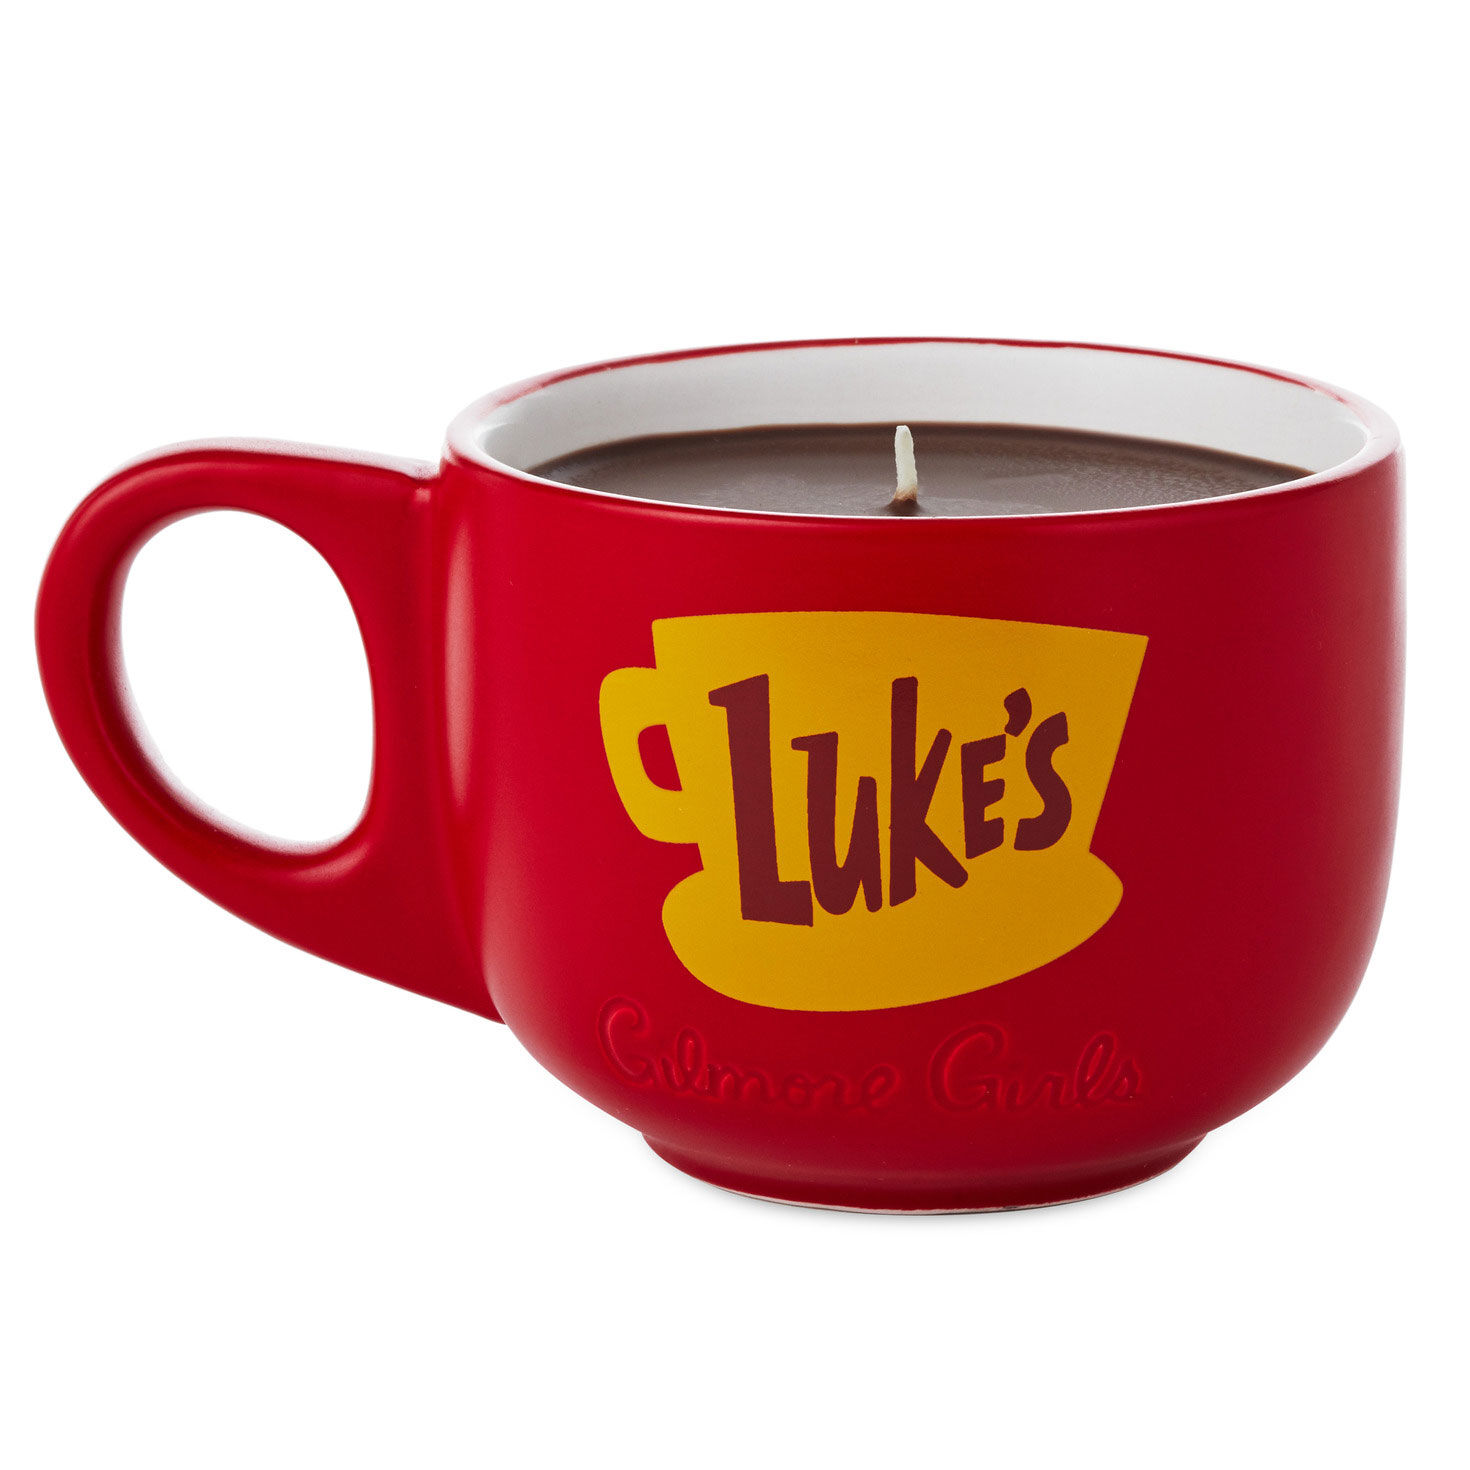 Gilmore Girls Coffee-Scented Luke's Diner Mug Candle - Candles - Hallmark